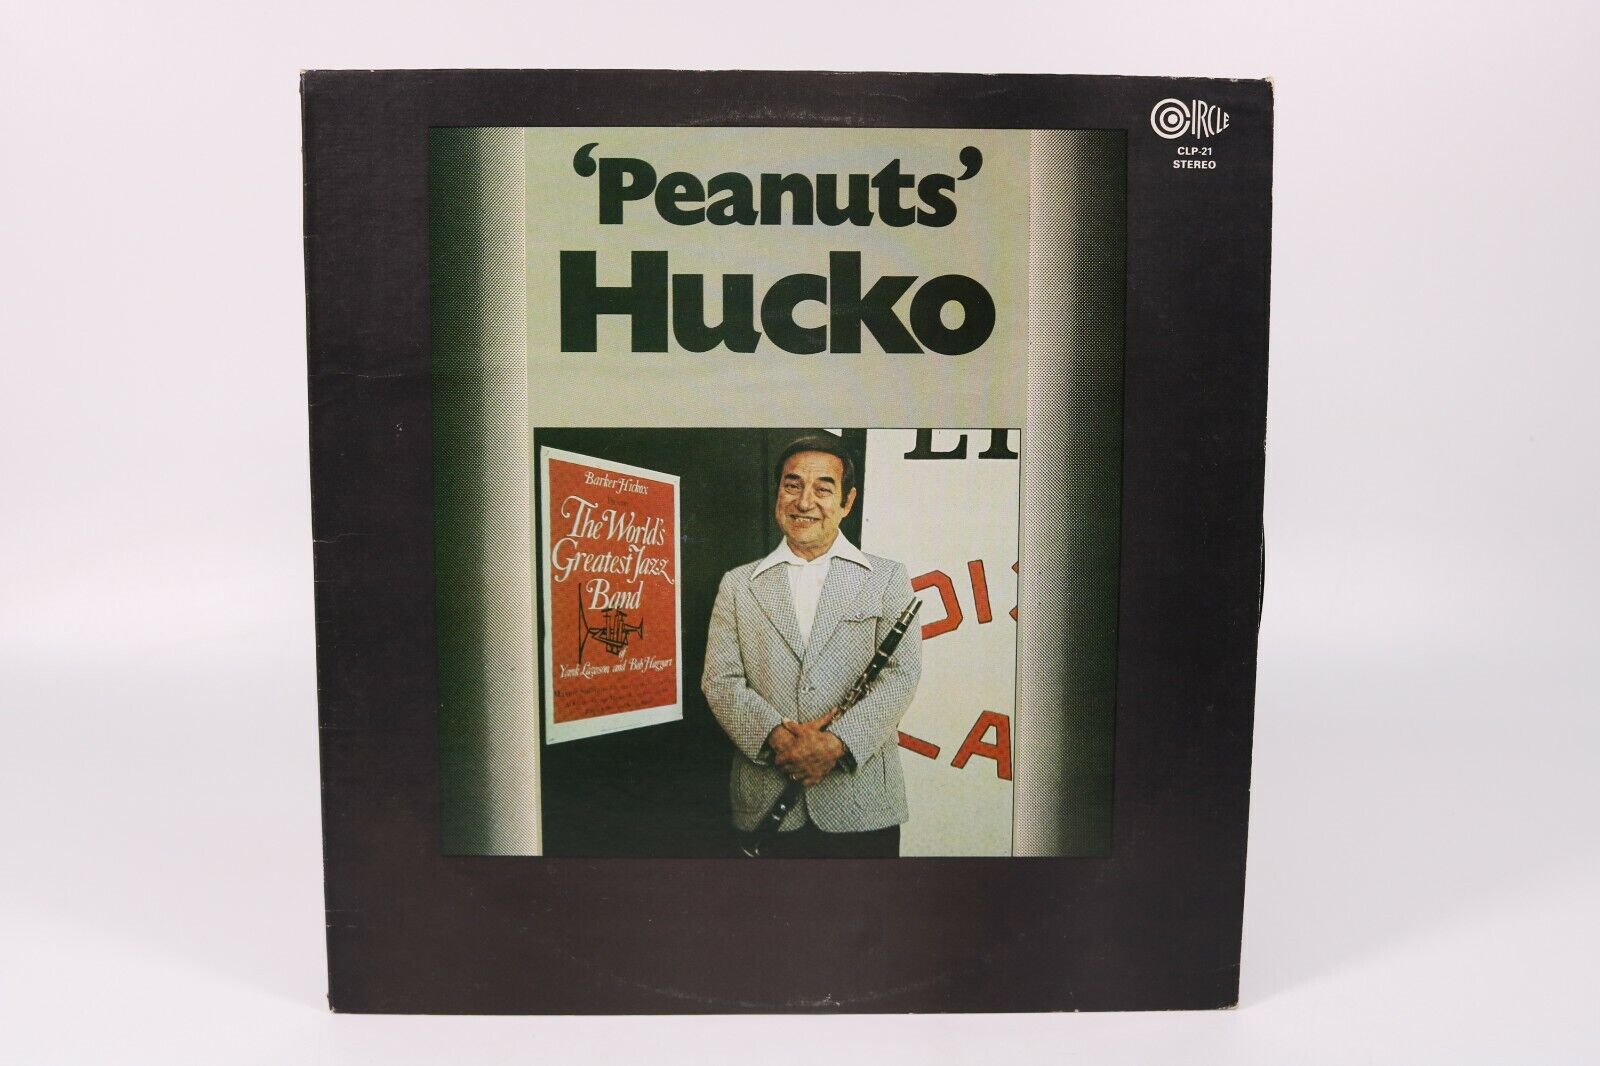 Peanuts Hucko World\'s Greatest Jazz Band 1981 Circle Records 33 Vinyl Record LP